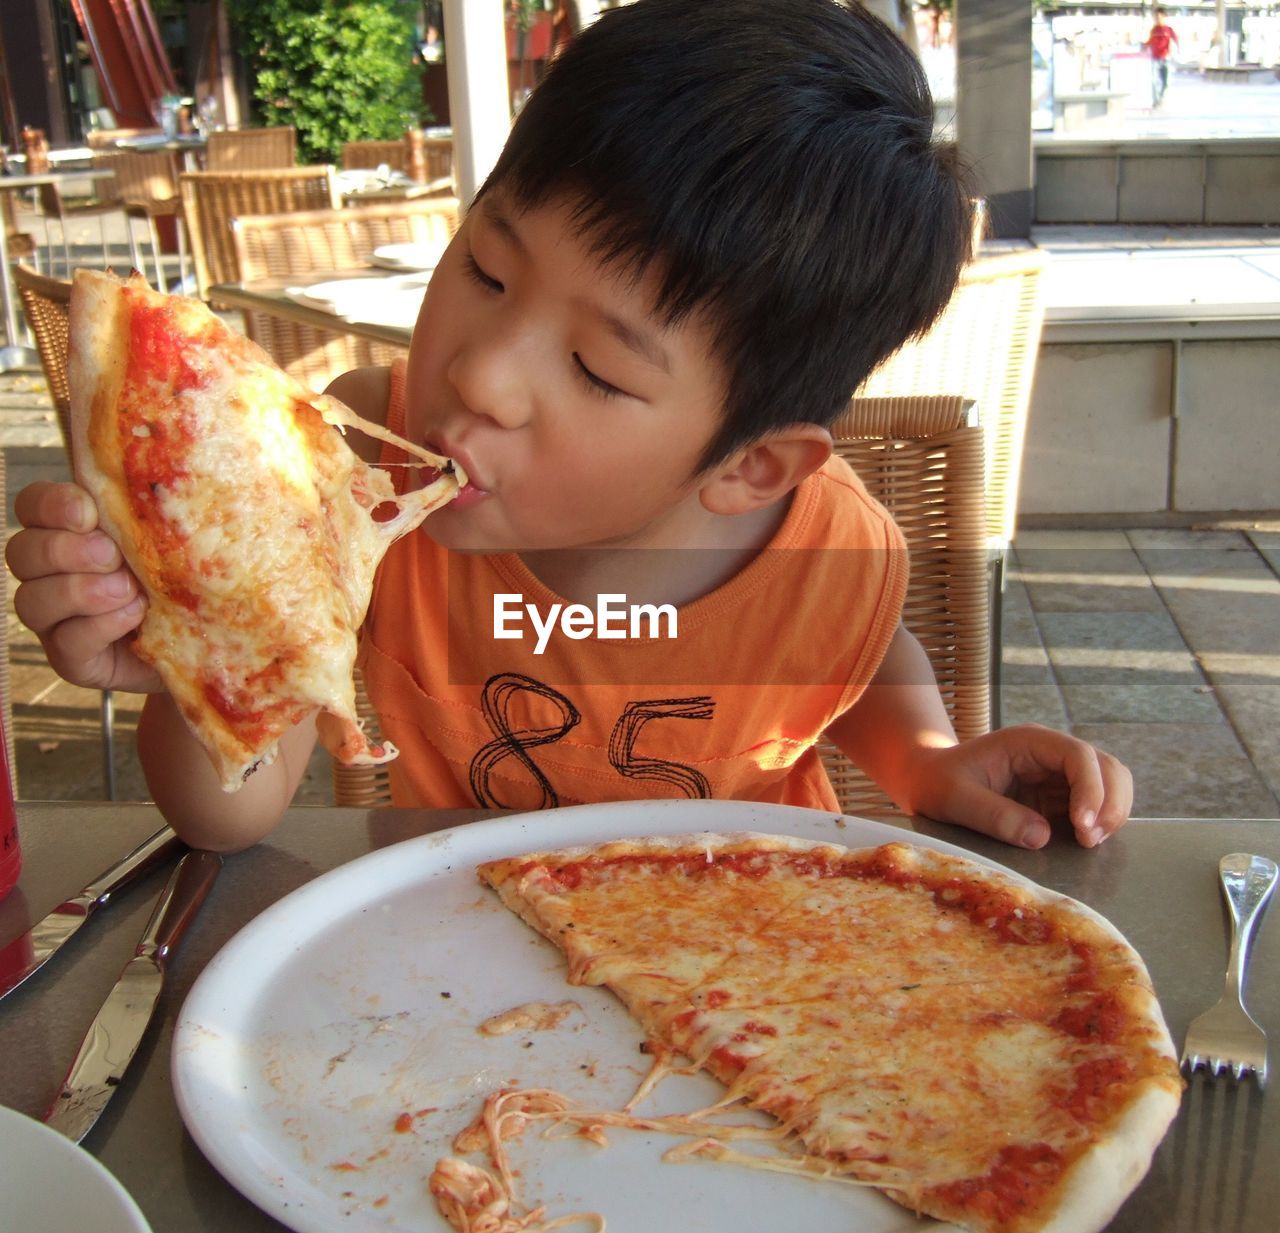 Boy eating pizza at restaurant